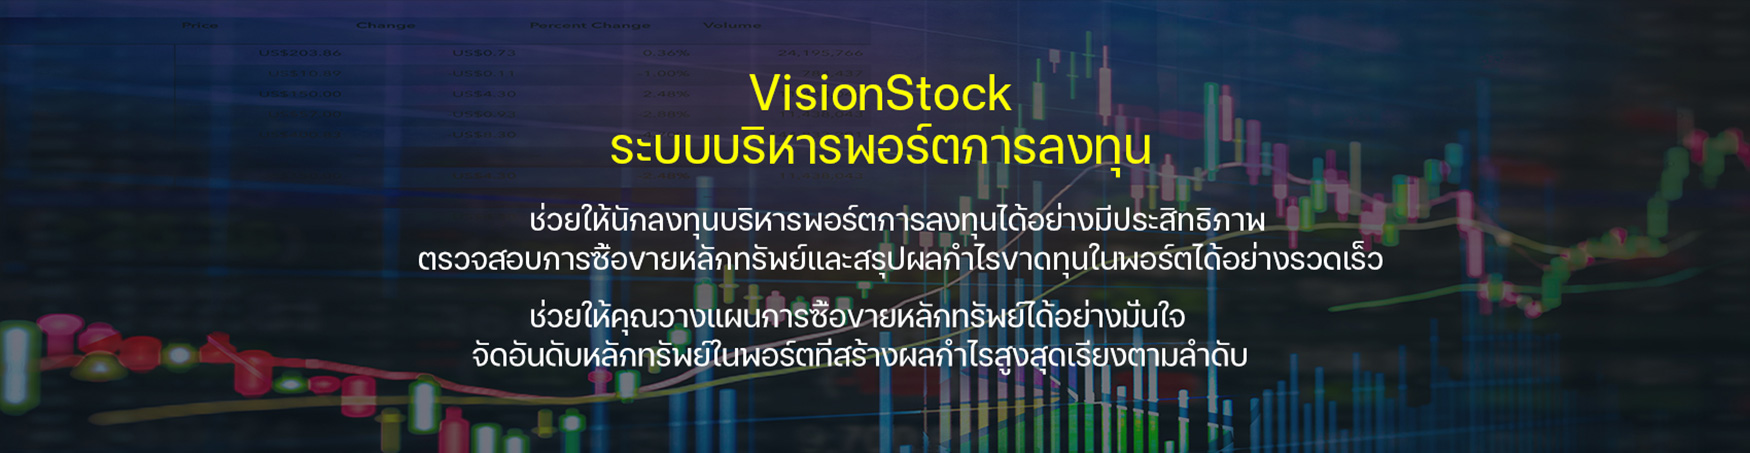 Banner-Visionstock